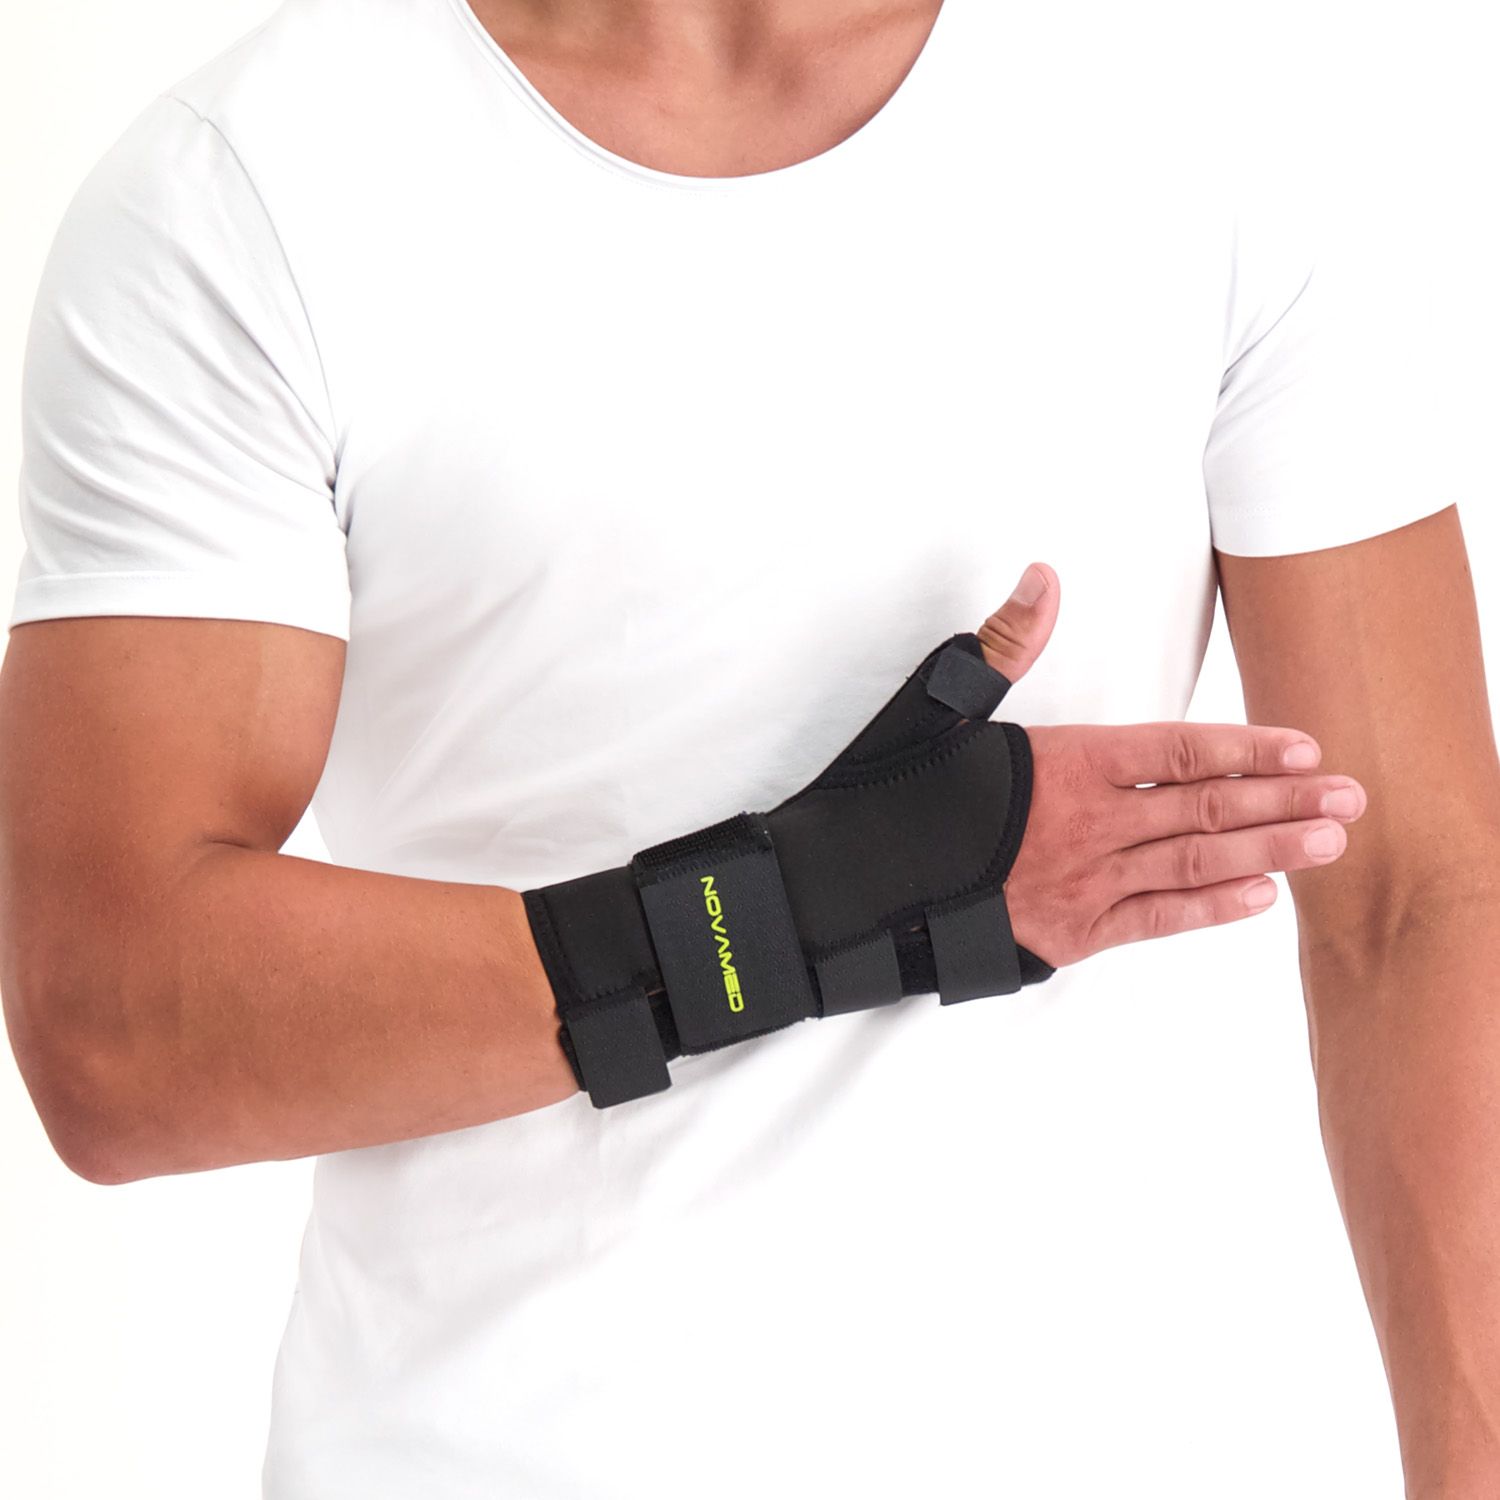 novamed thumb support wrist splint Velcro strap explanation